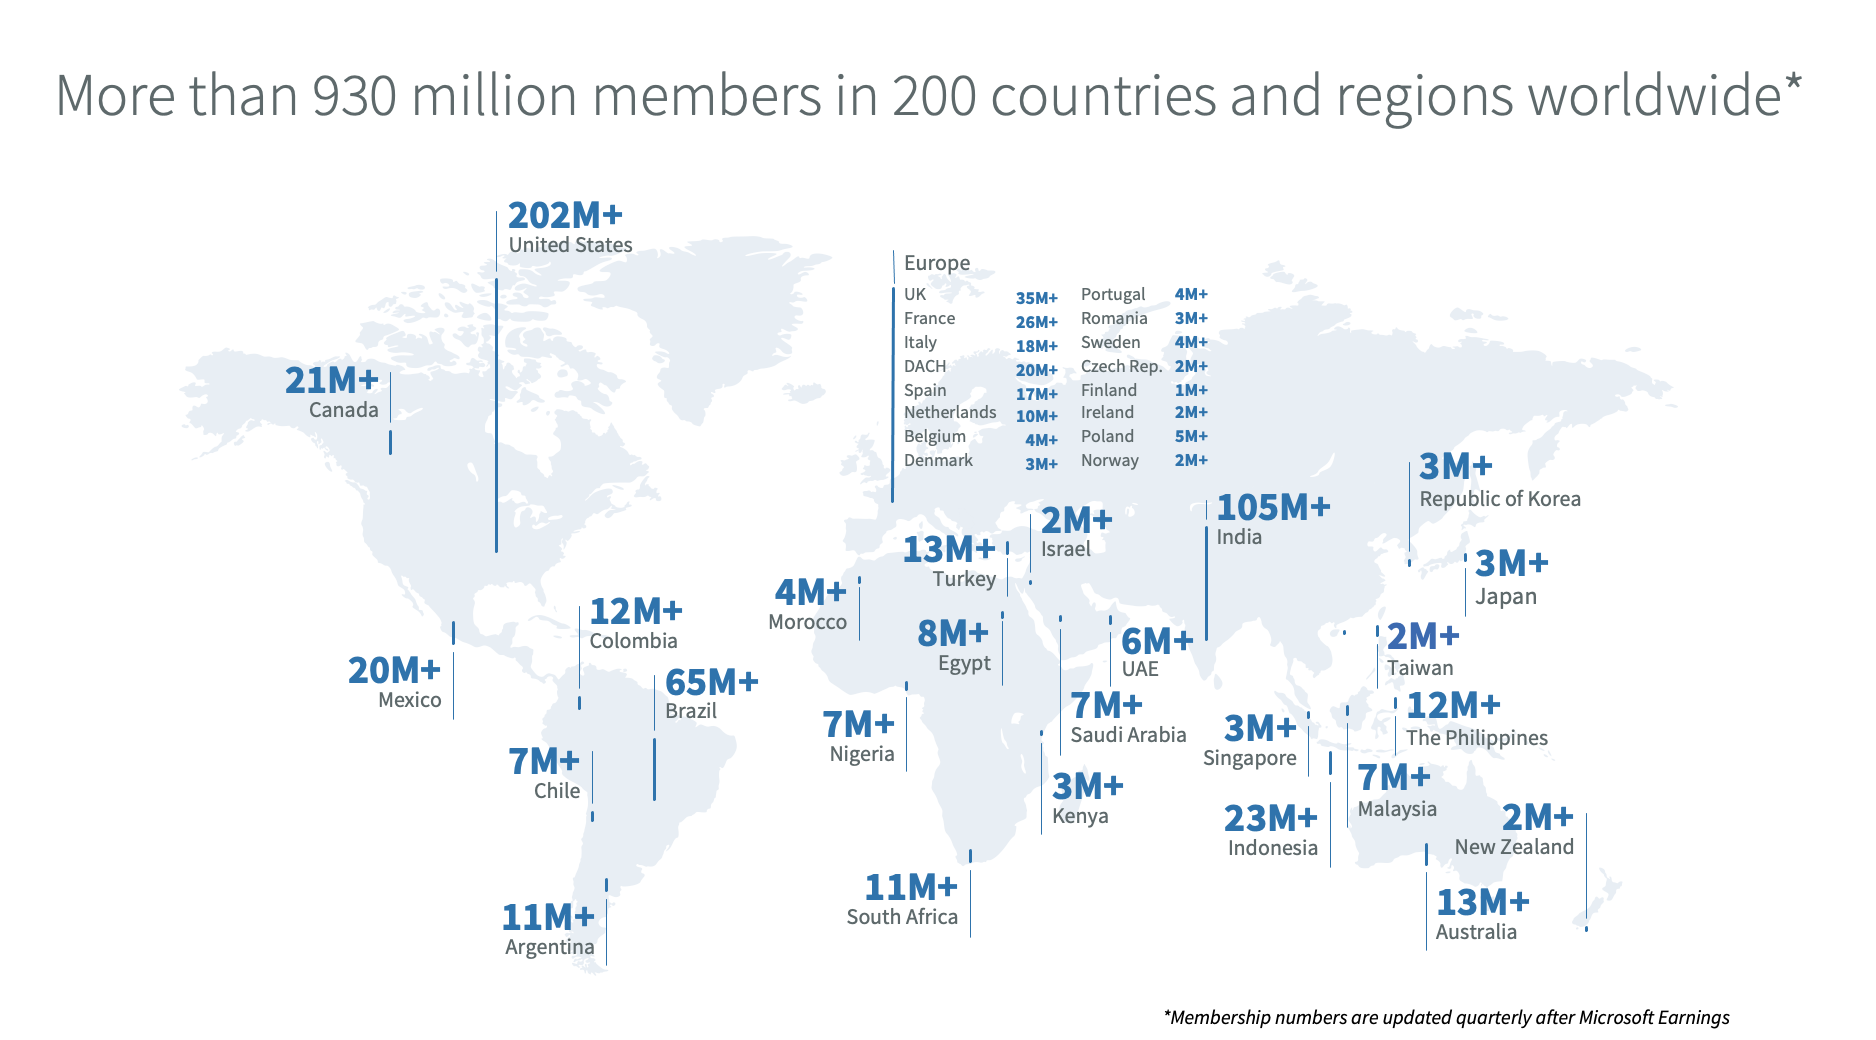 Number of LinkedIn members